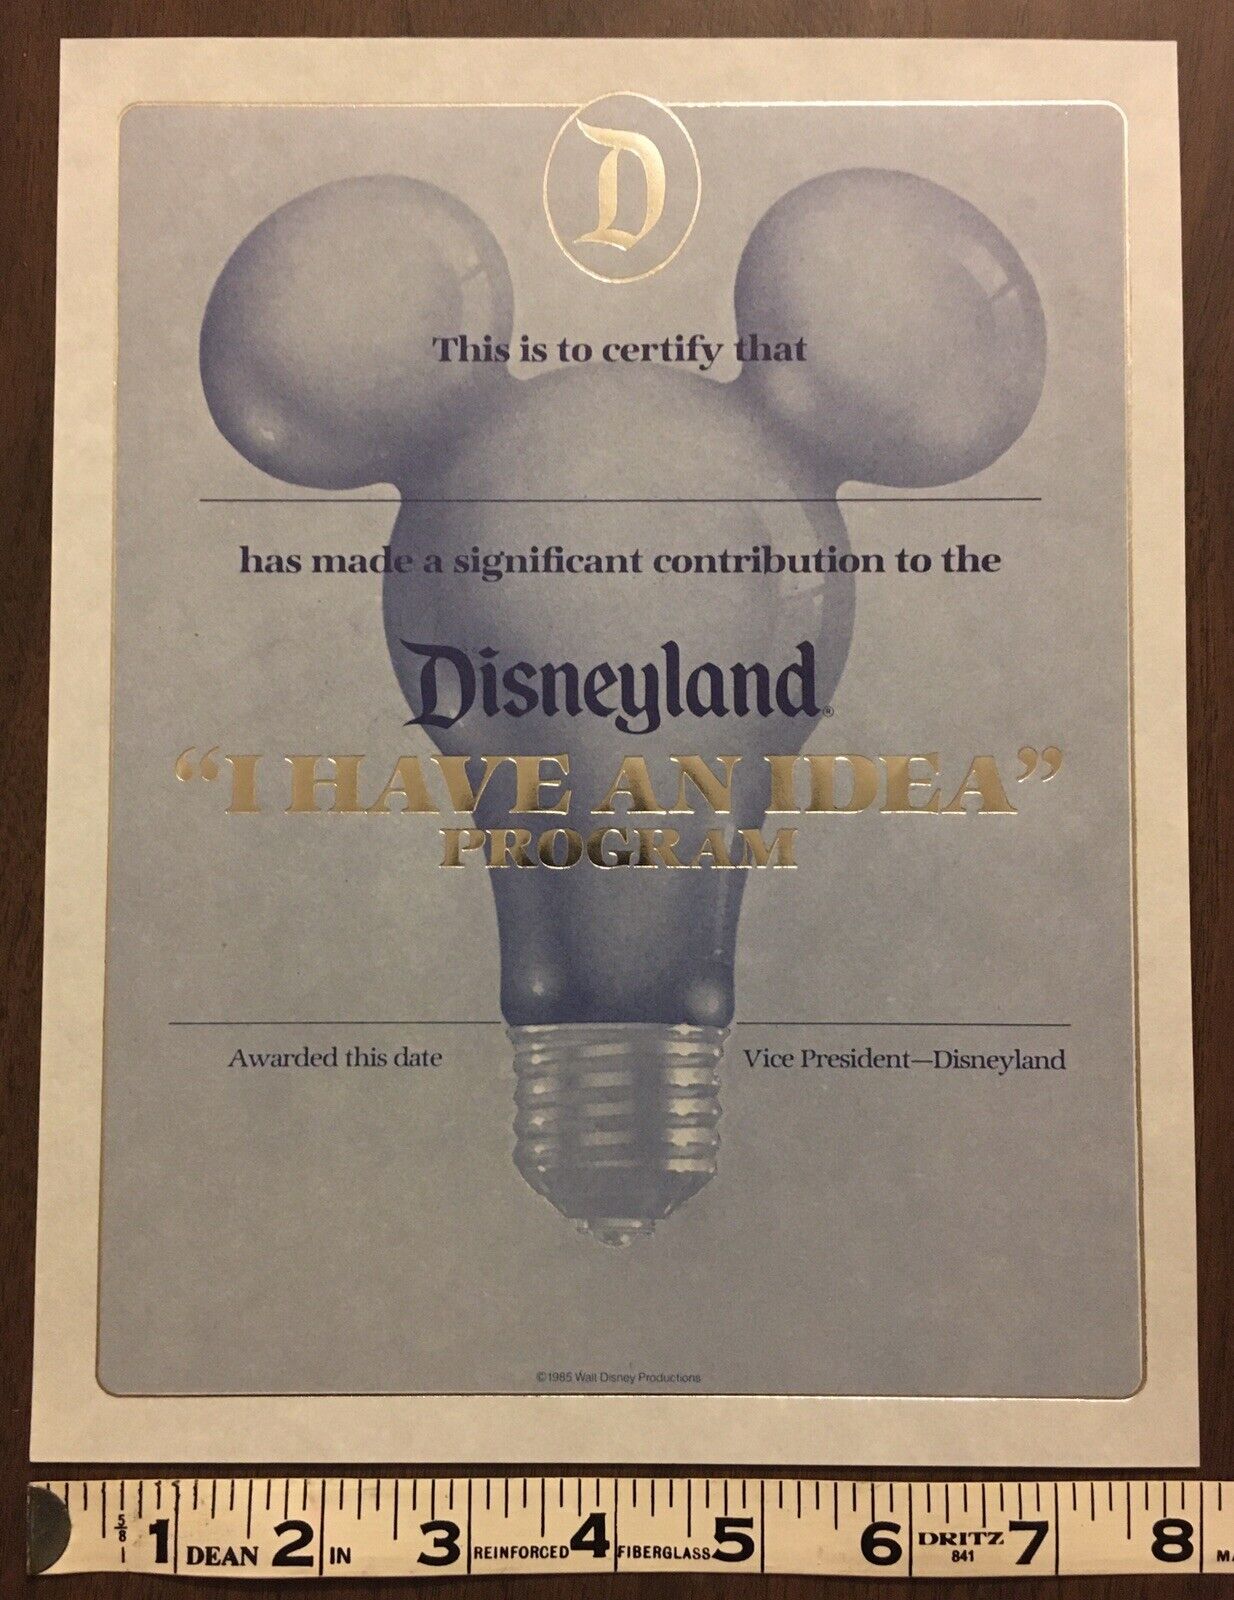 Rare 1985 Disneyland “I Have An Idea” Program Certificate- excellent condition